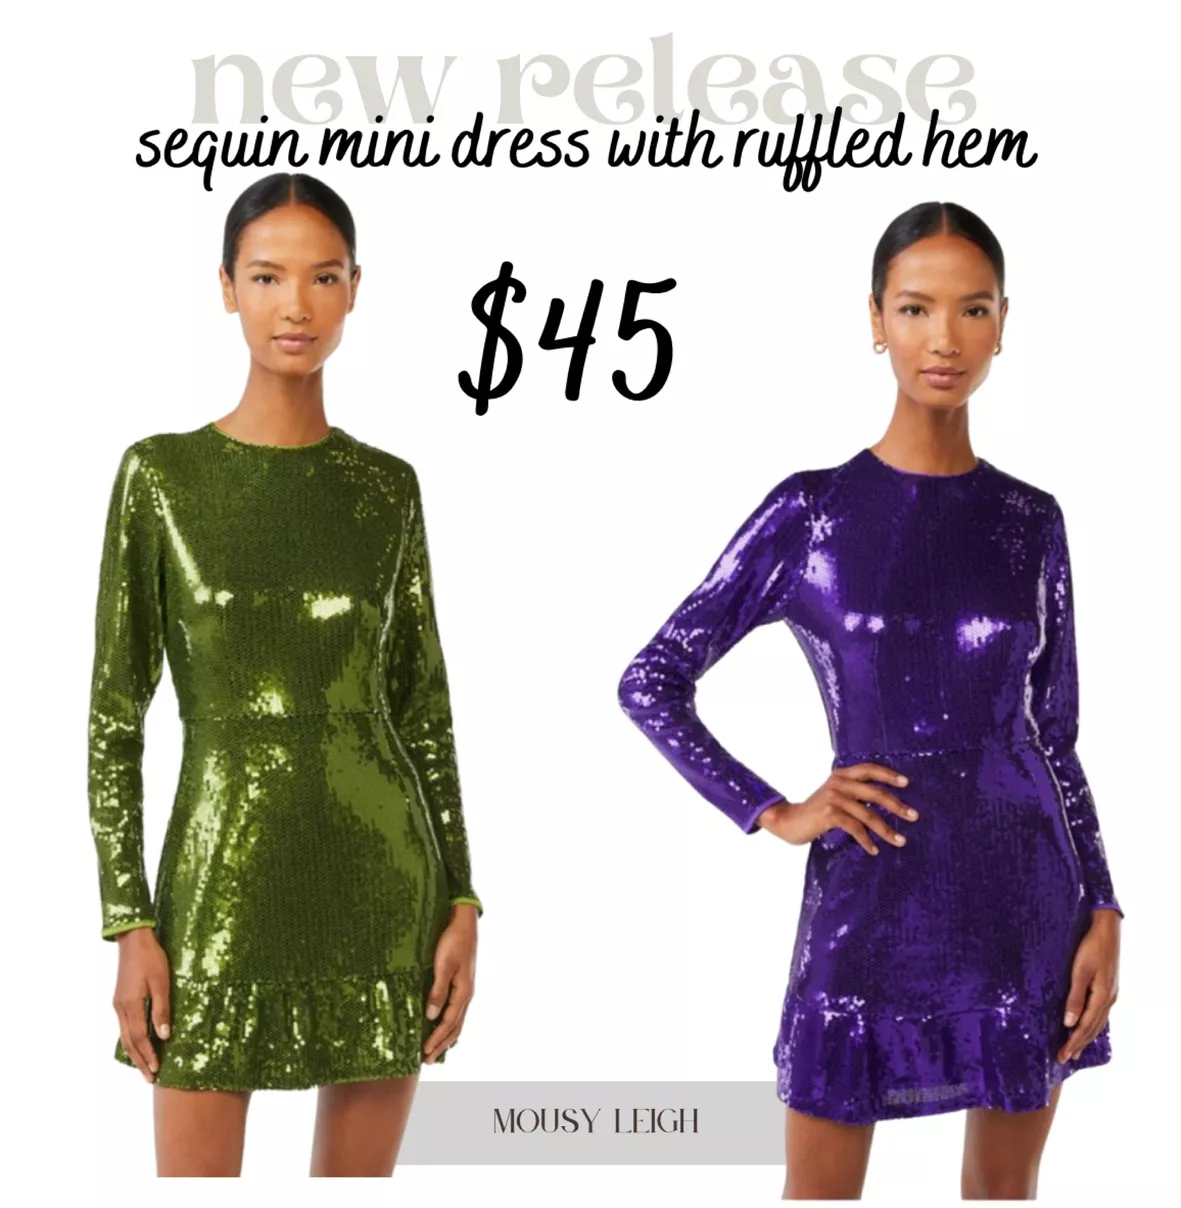 Scoop Women's Sequin Mini Dress with Ruffled Hem